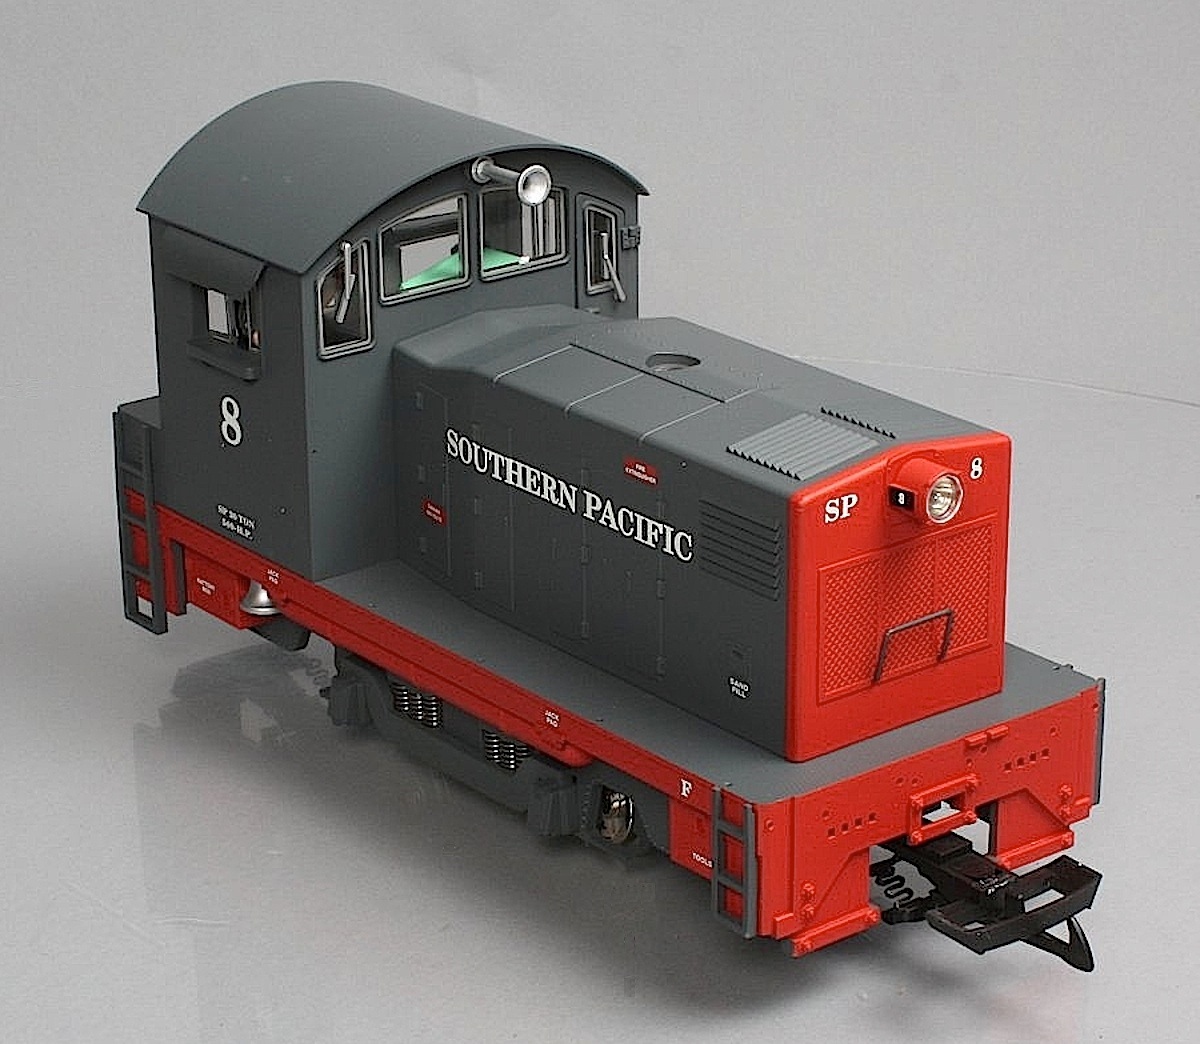 Southern Pacific 20 Tonnen Diesellok (Diesel locomotive) 8